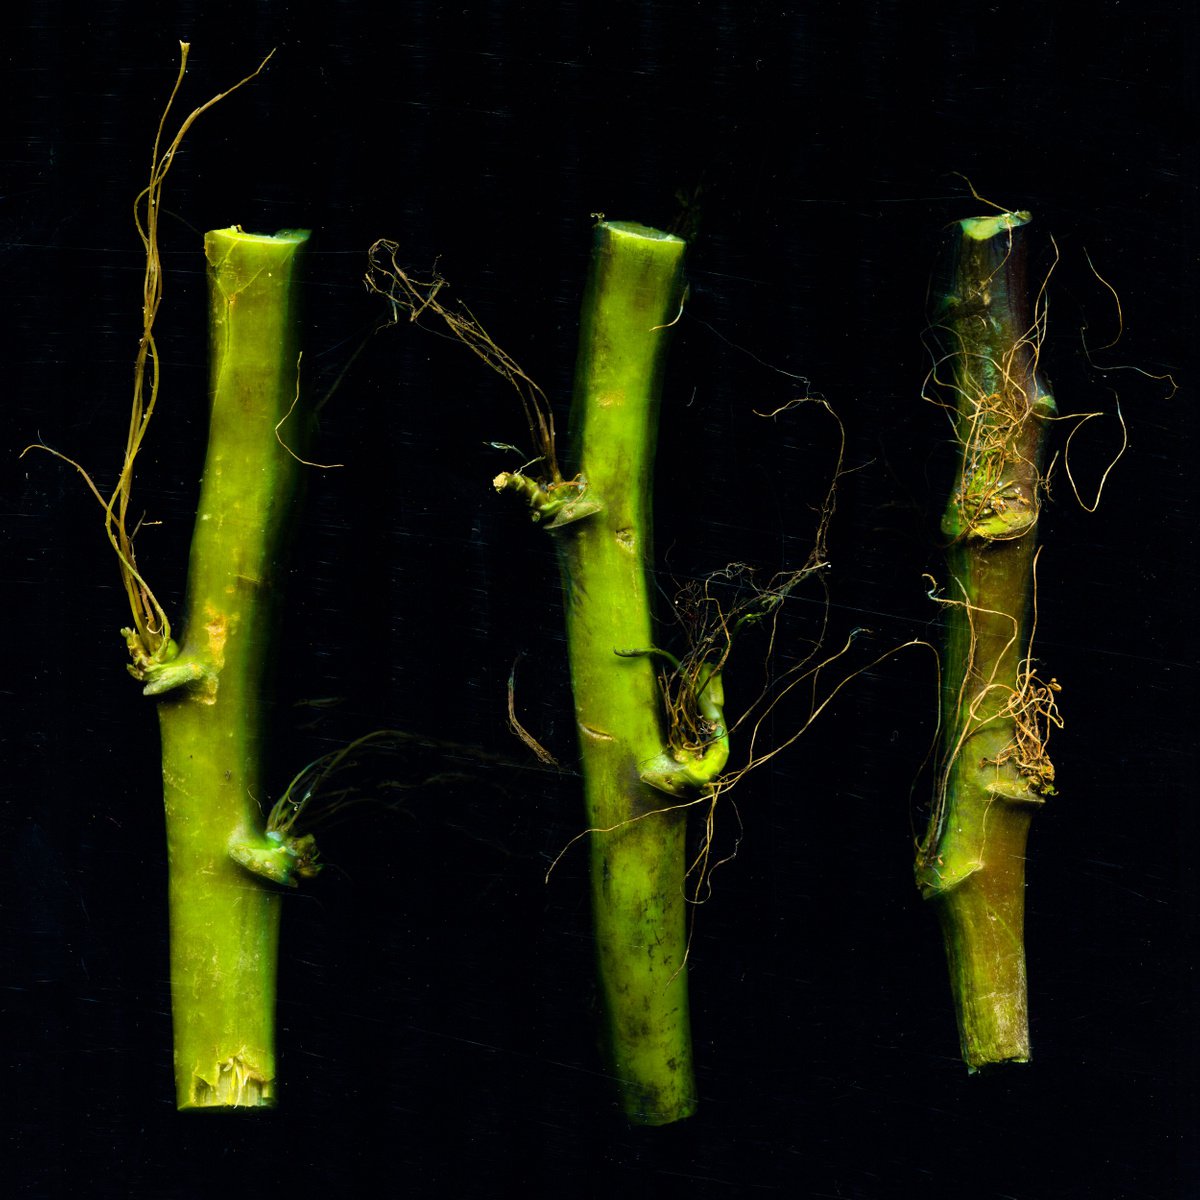 seaweed, stems and algae 4 by Jochim Lichtenberger